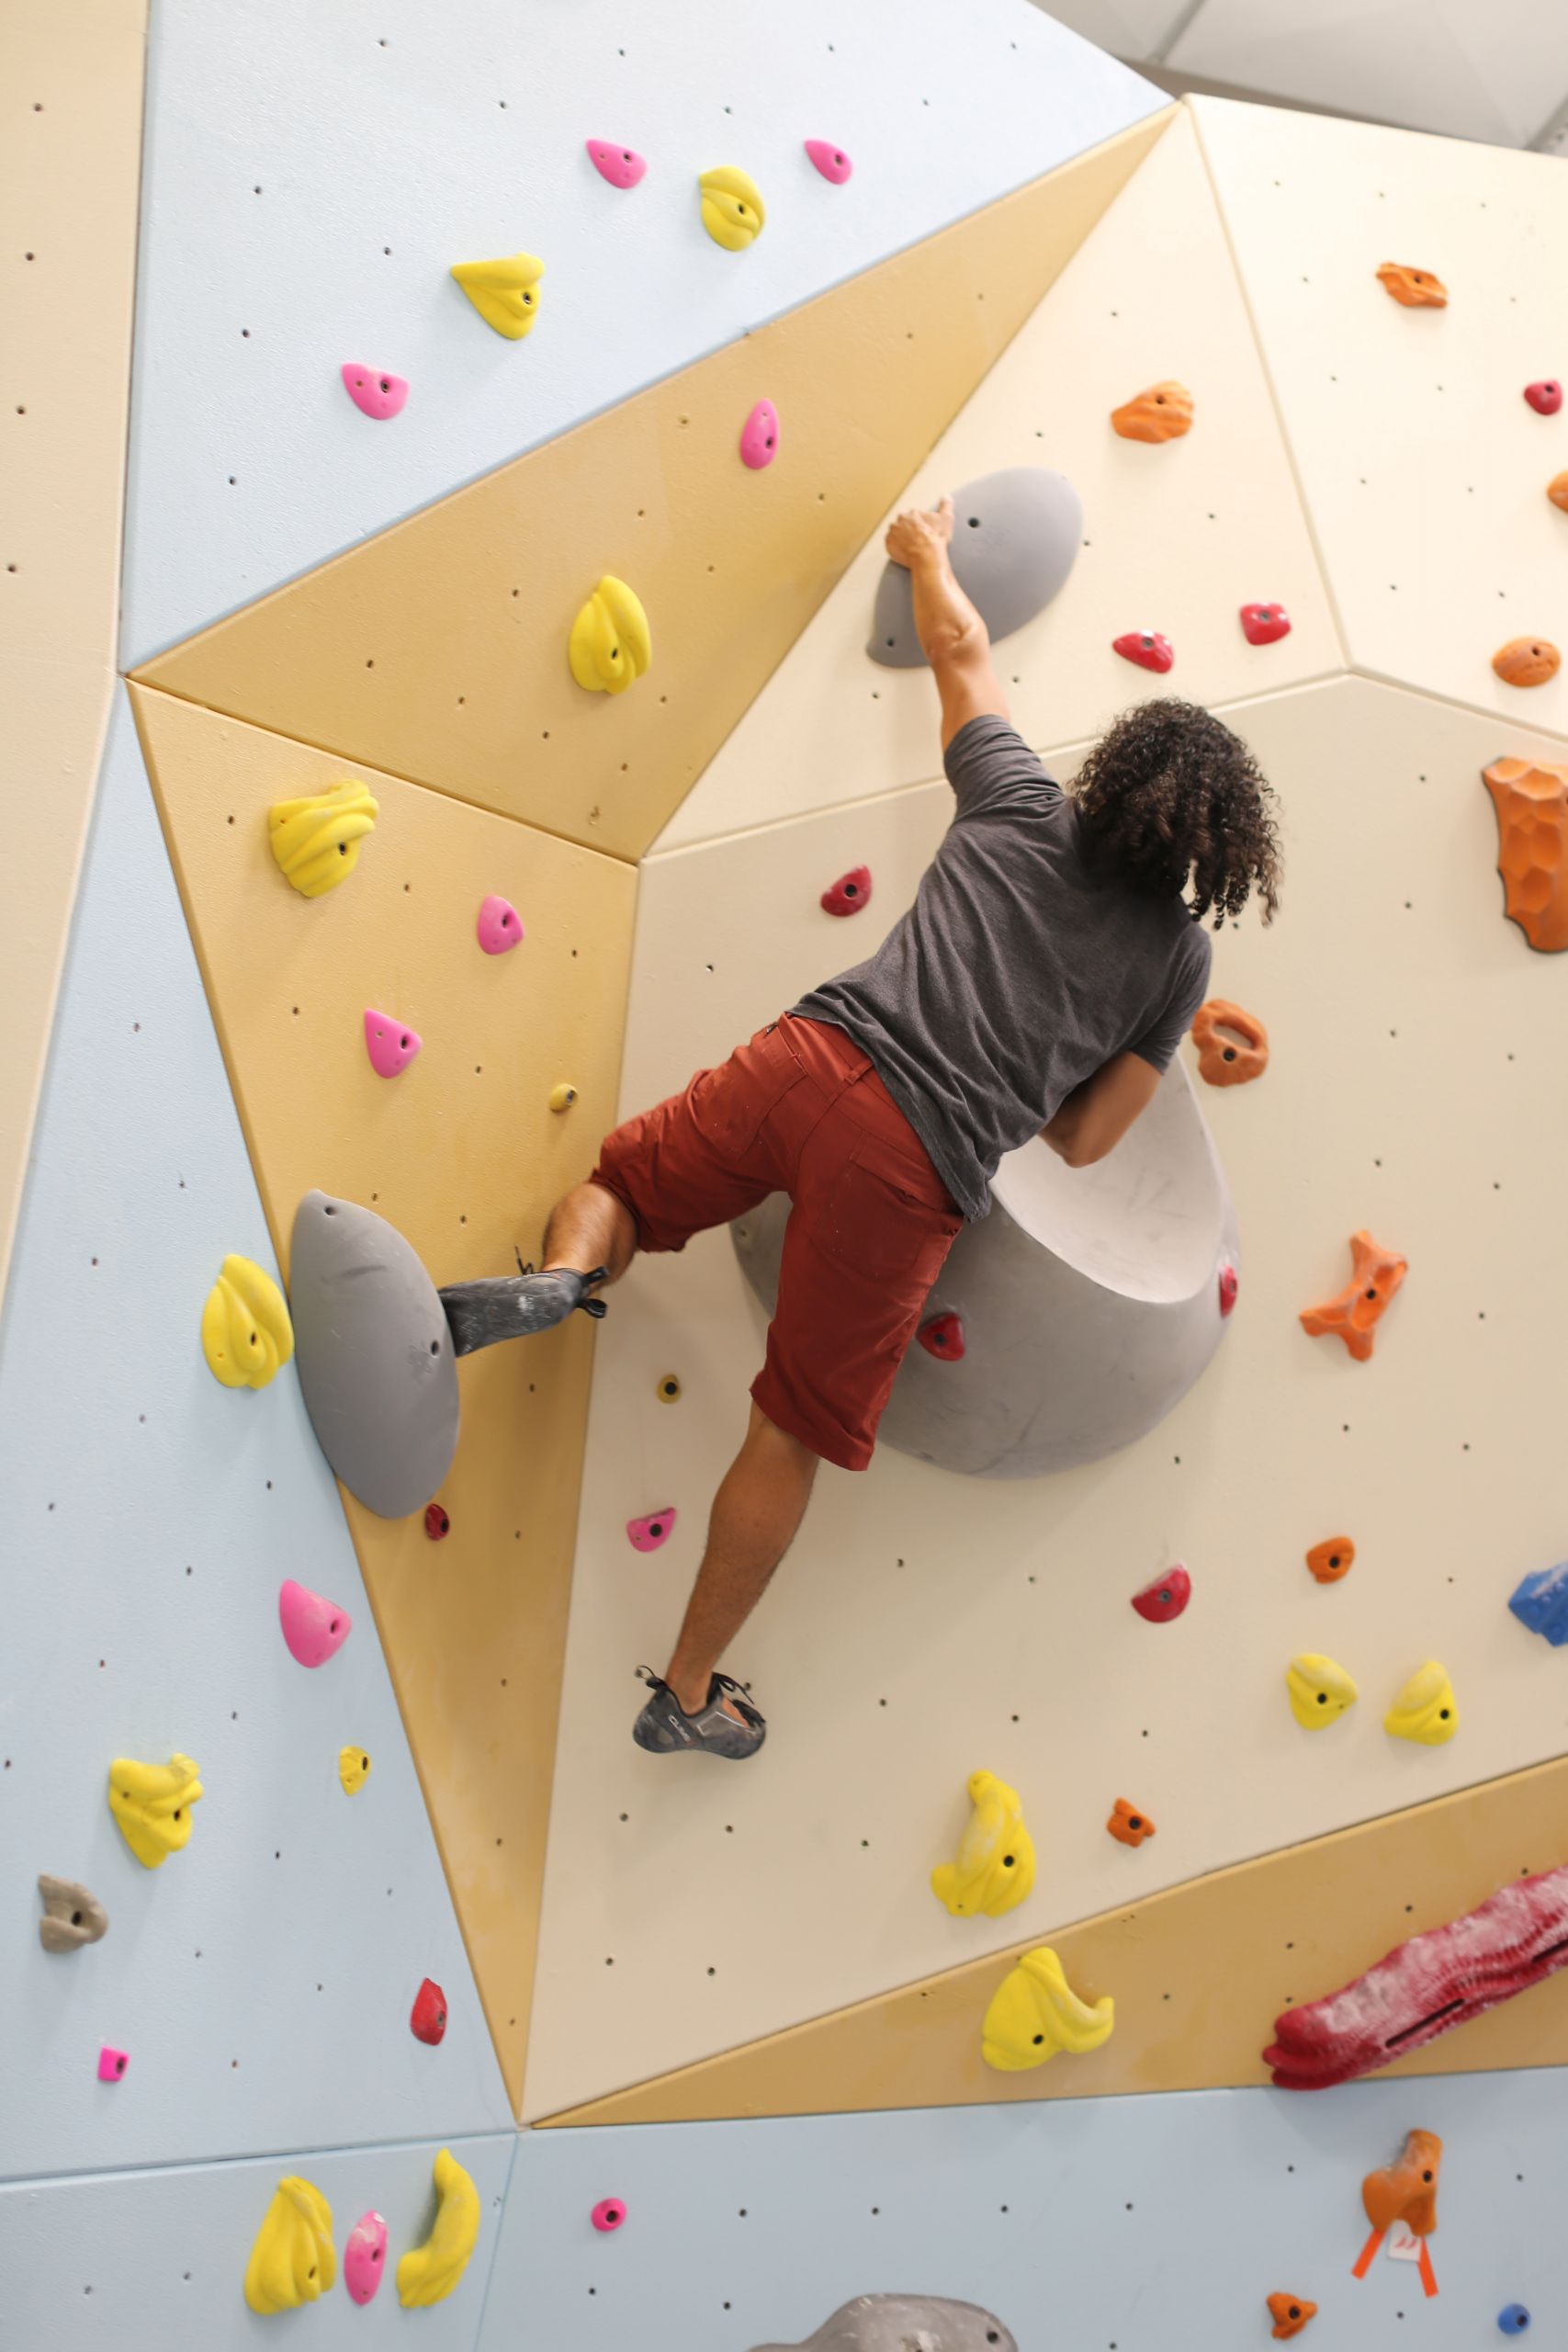 DIY Outdoor Climbing Wall
 Climbing Walls Kits Add a rock climbing wall quickly